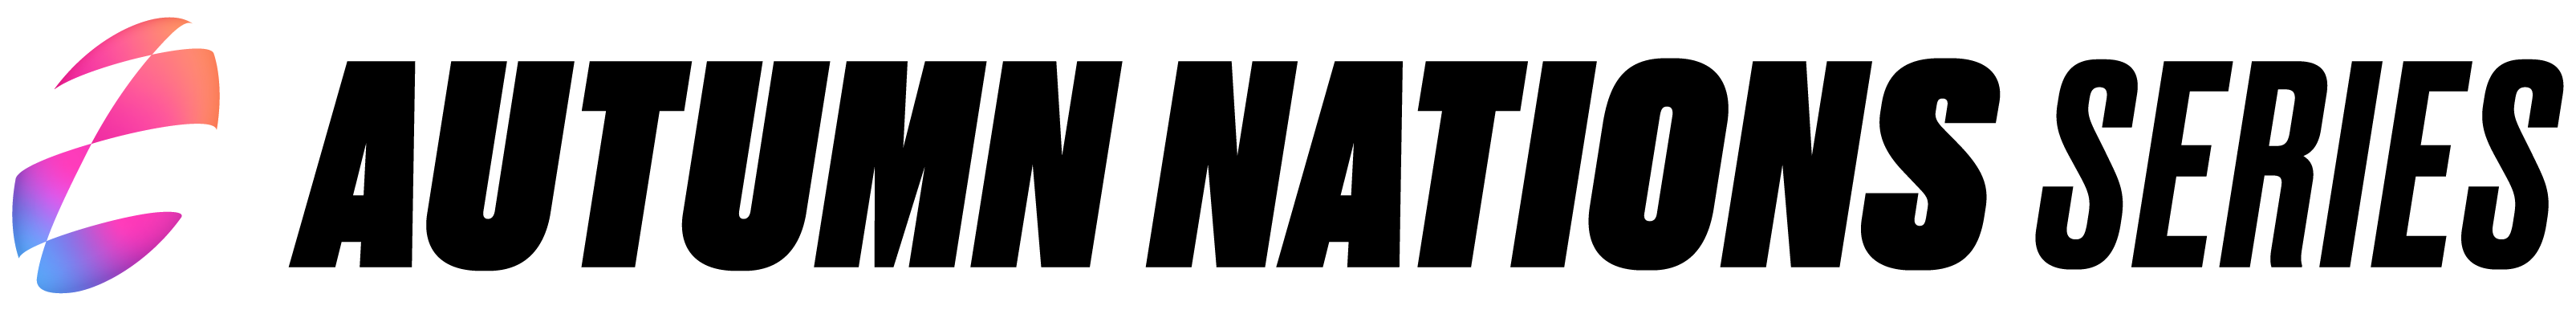 ANS Landscape RGB Logo